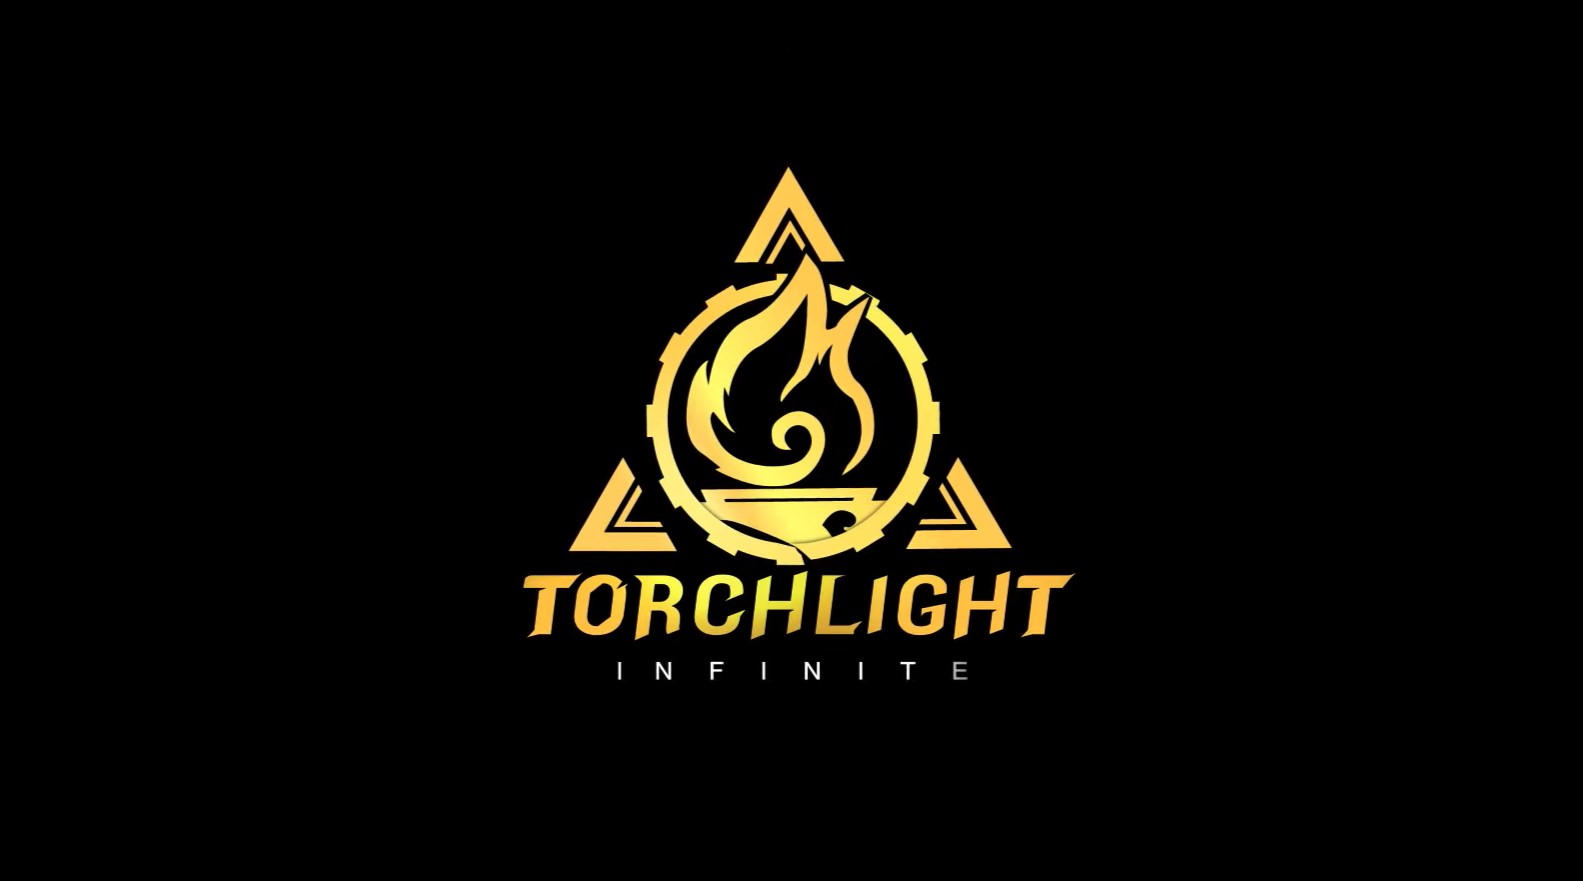 Download Torchlight Infinite